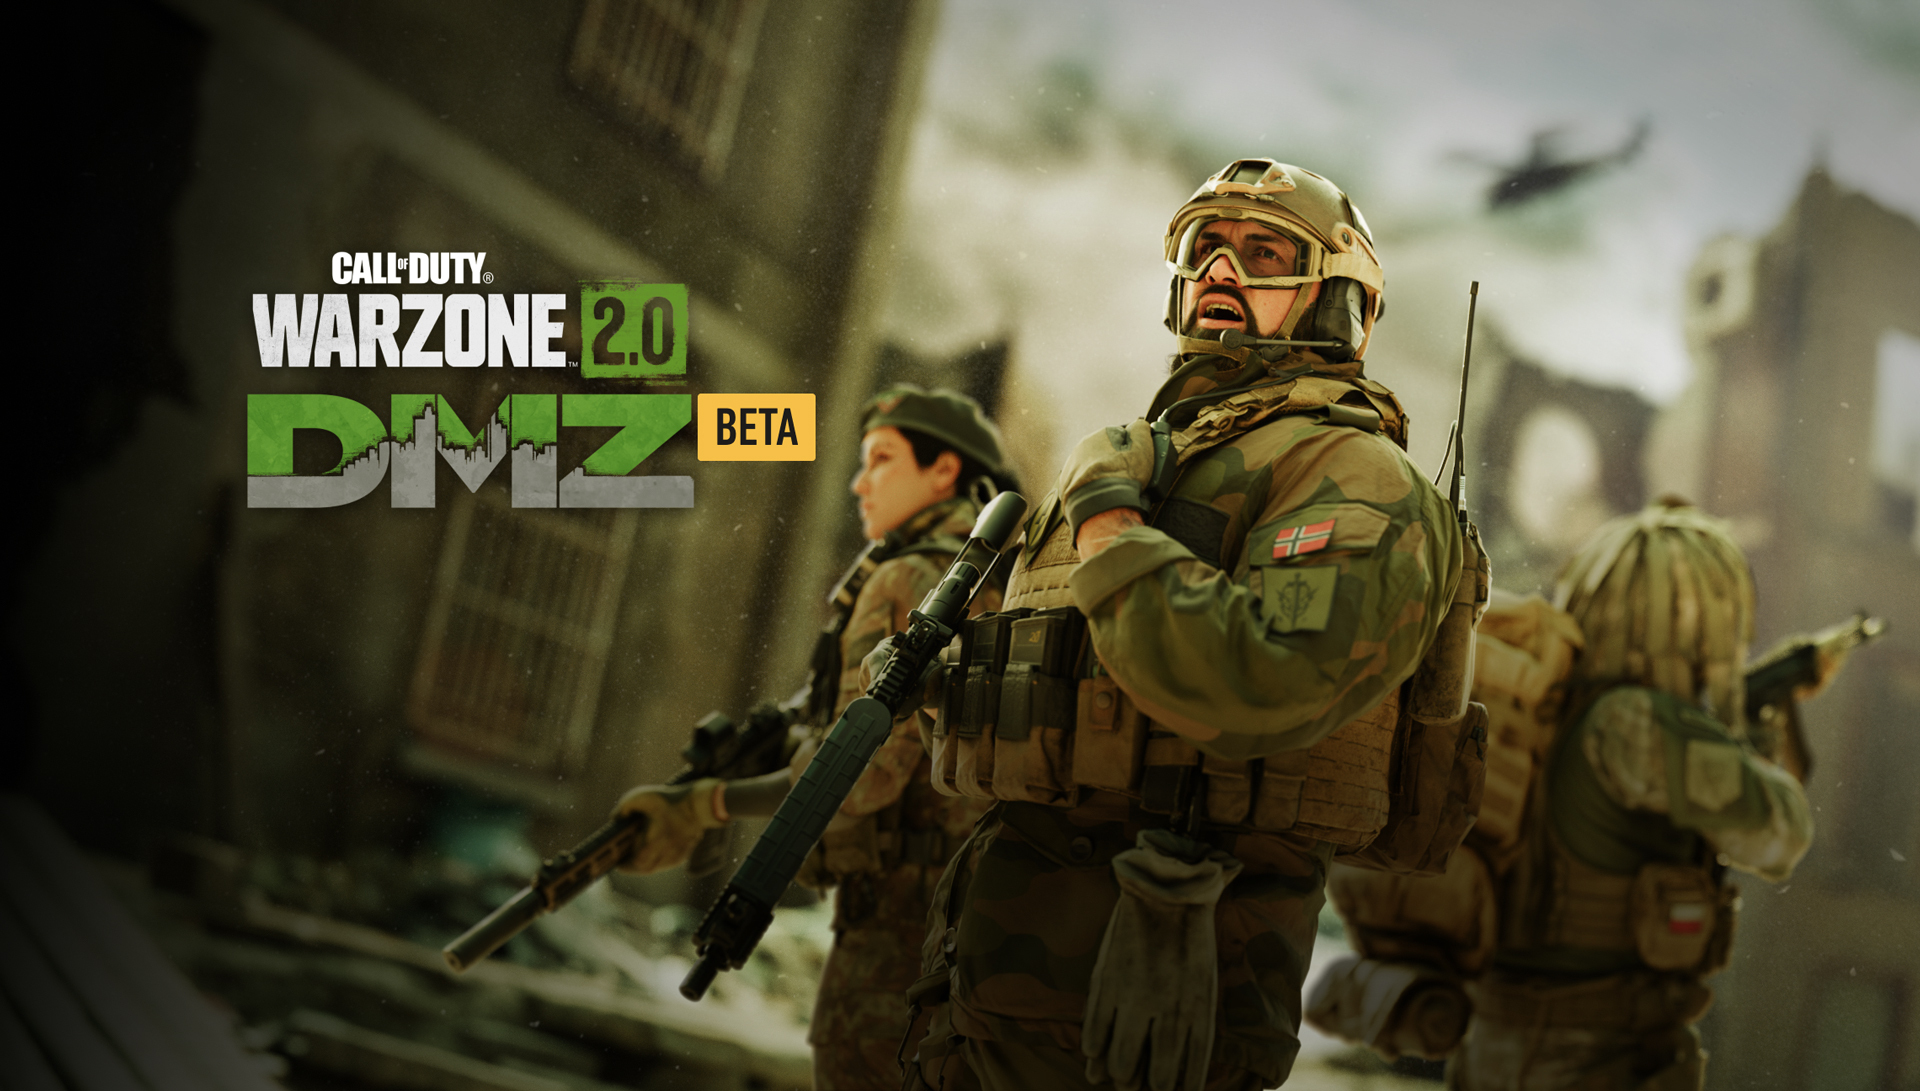 Warzone 2.0 DMZ Beta poster.